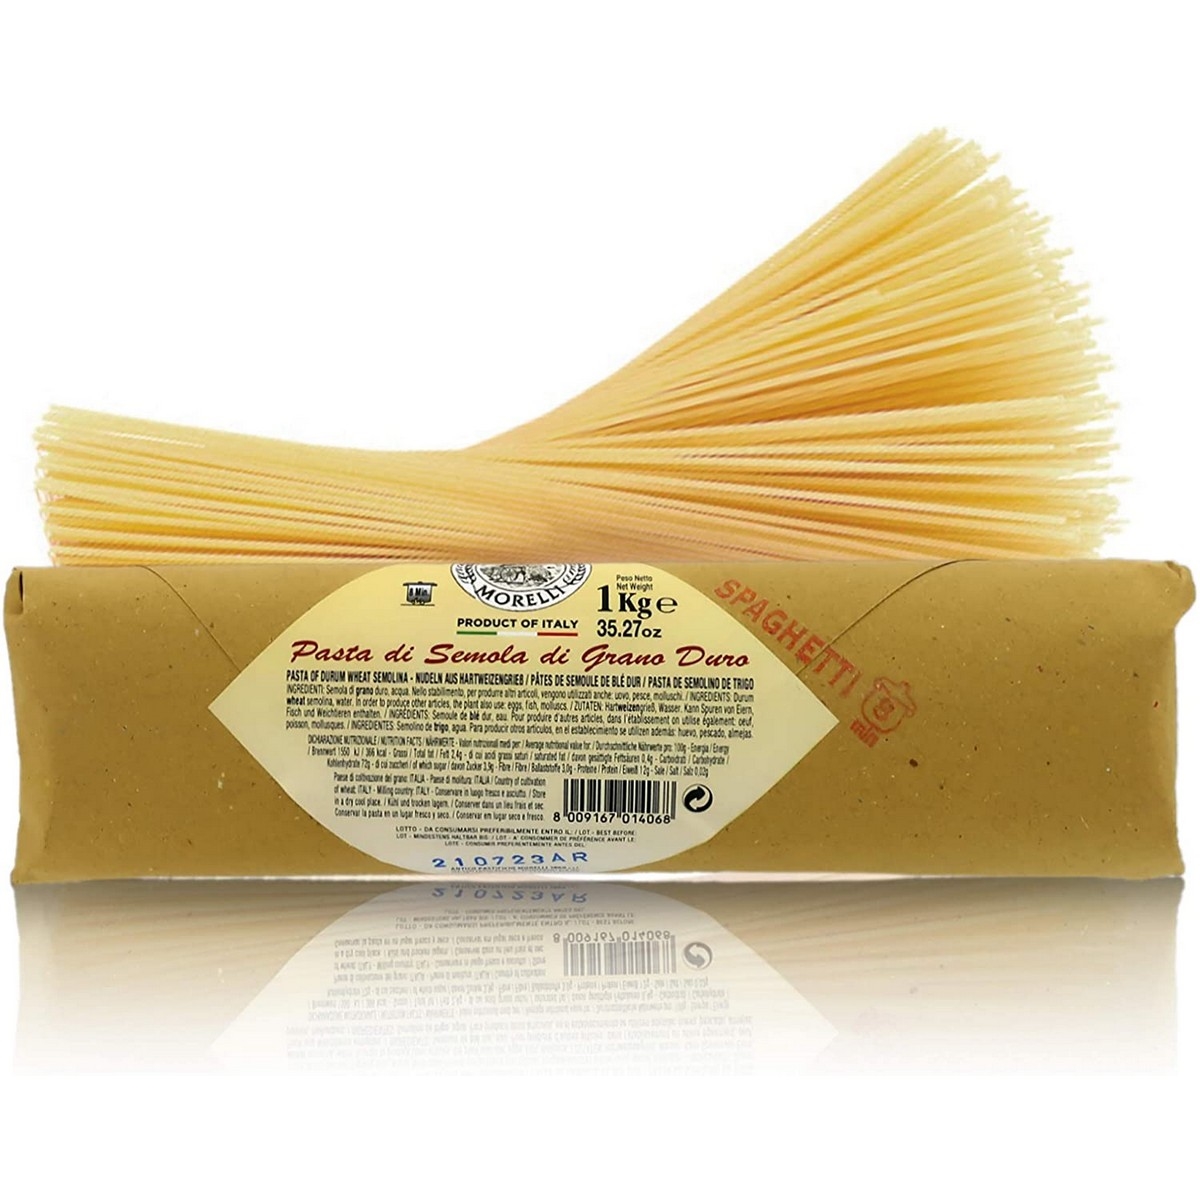 durum wheat semolina pasta - 8 minute spaghetti wrapped - 1 kg